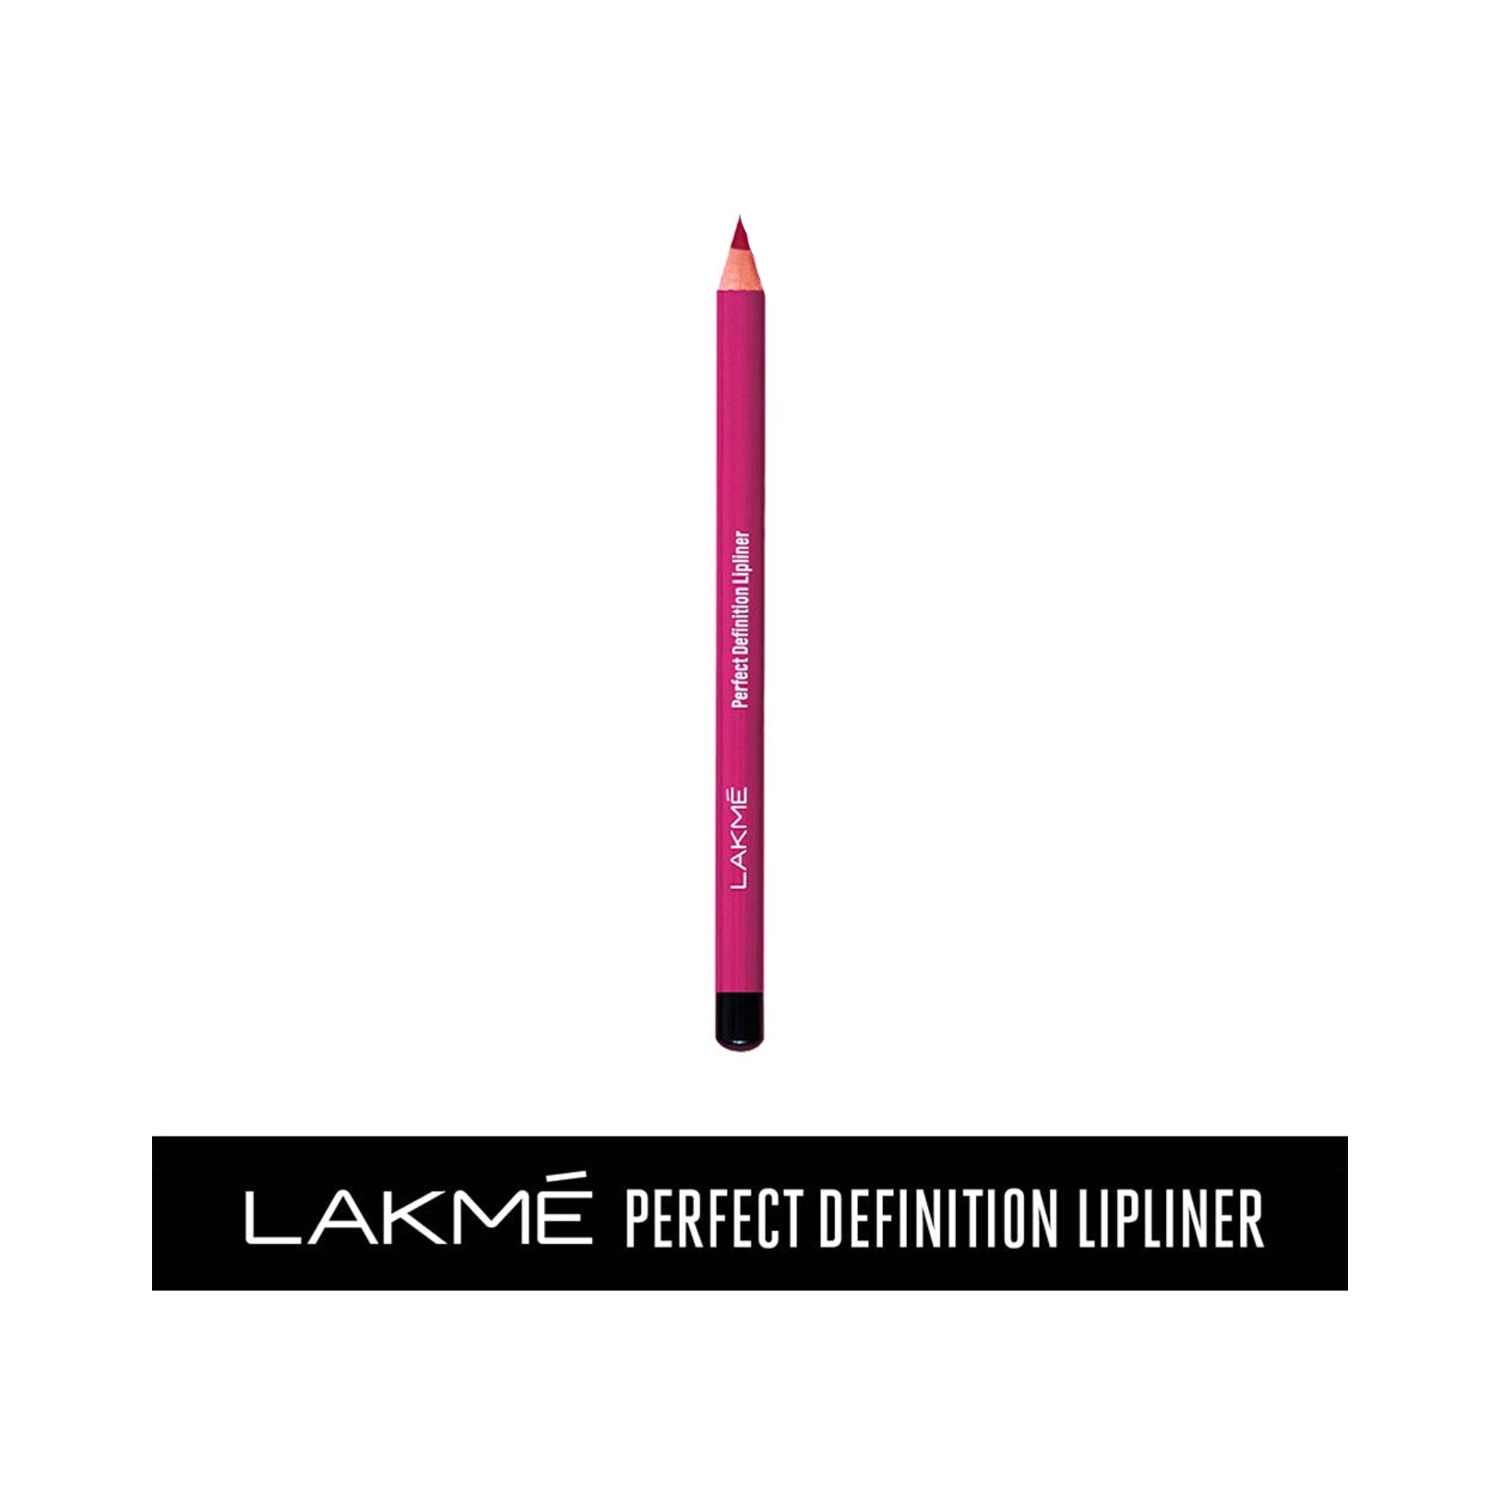 Lakme | Lakme Perfect Definition Lip Liner - Cosmos Blush (0.78g)